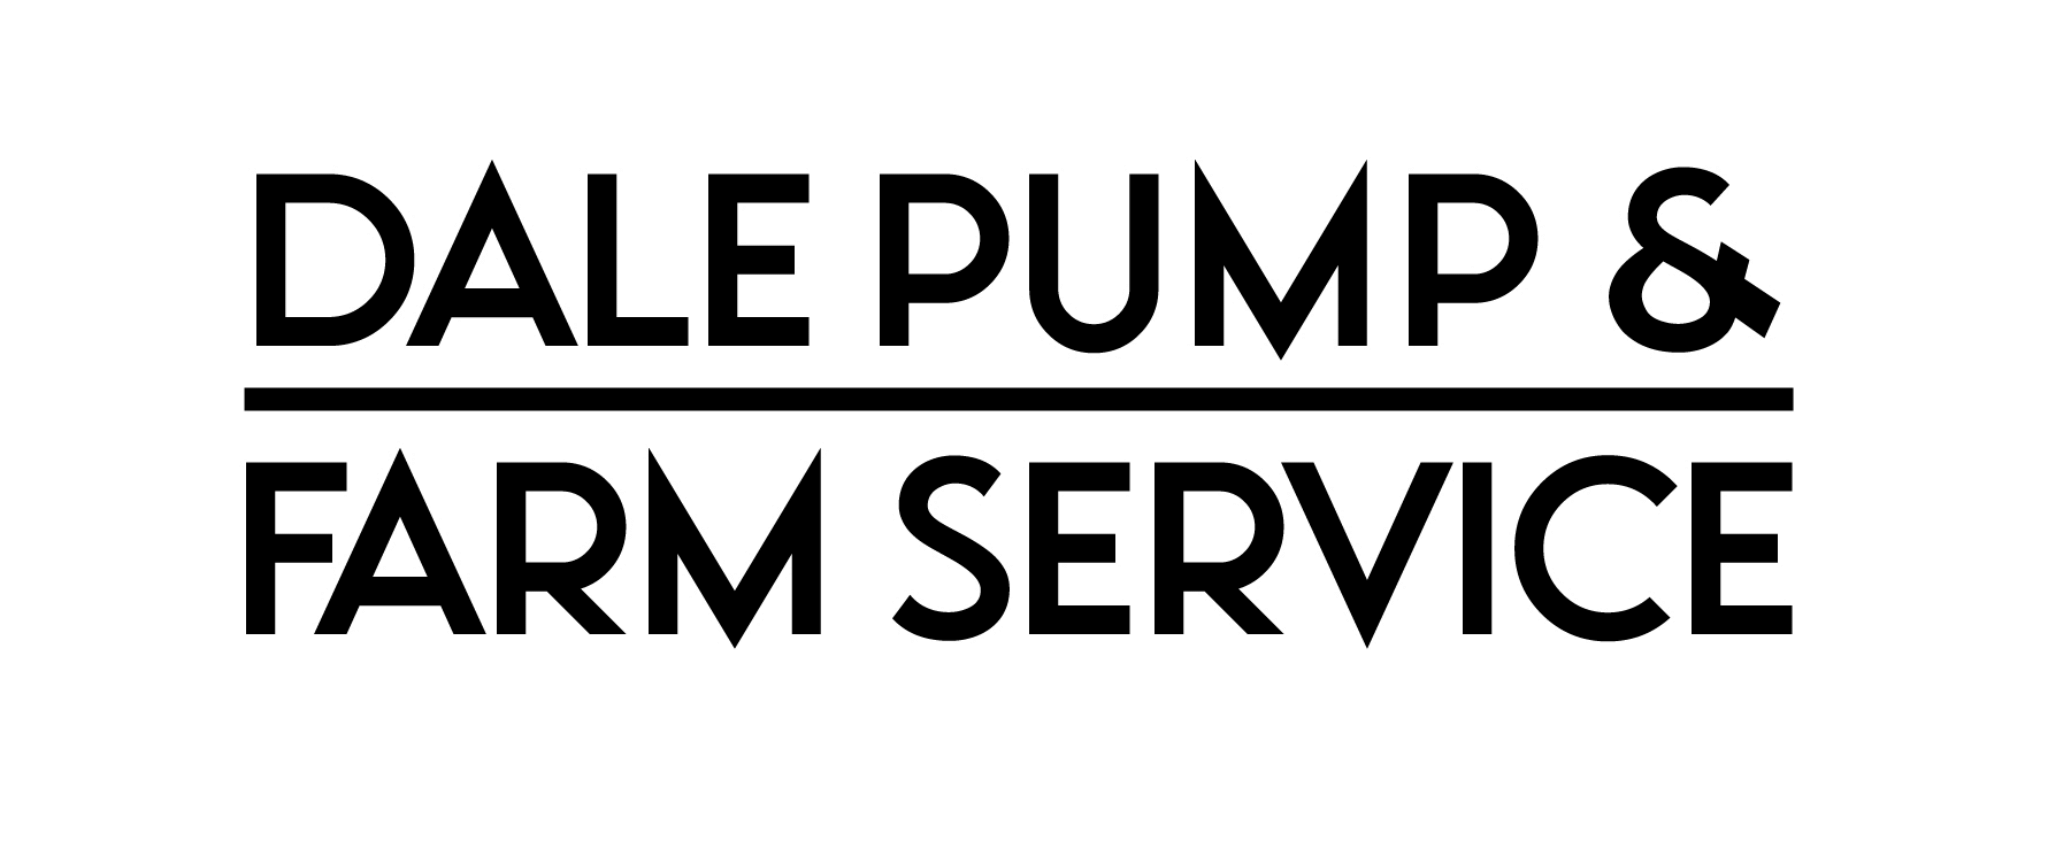 Dale Pump & Farm Service